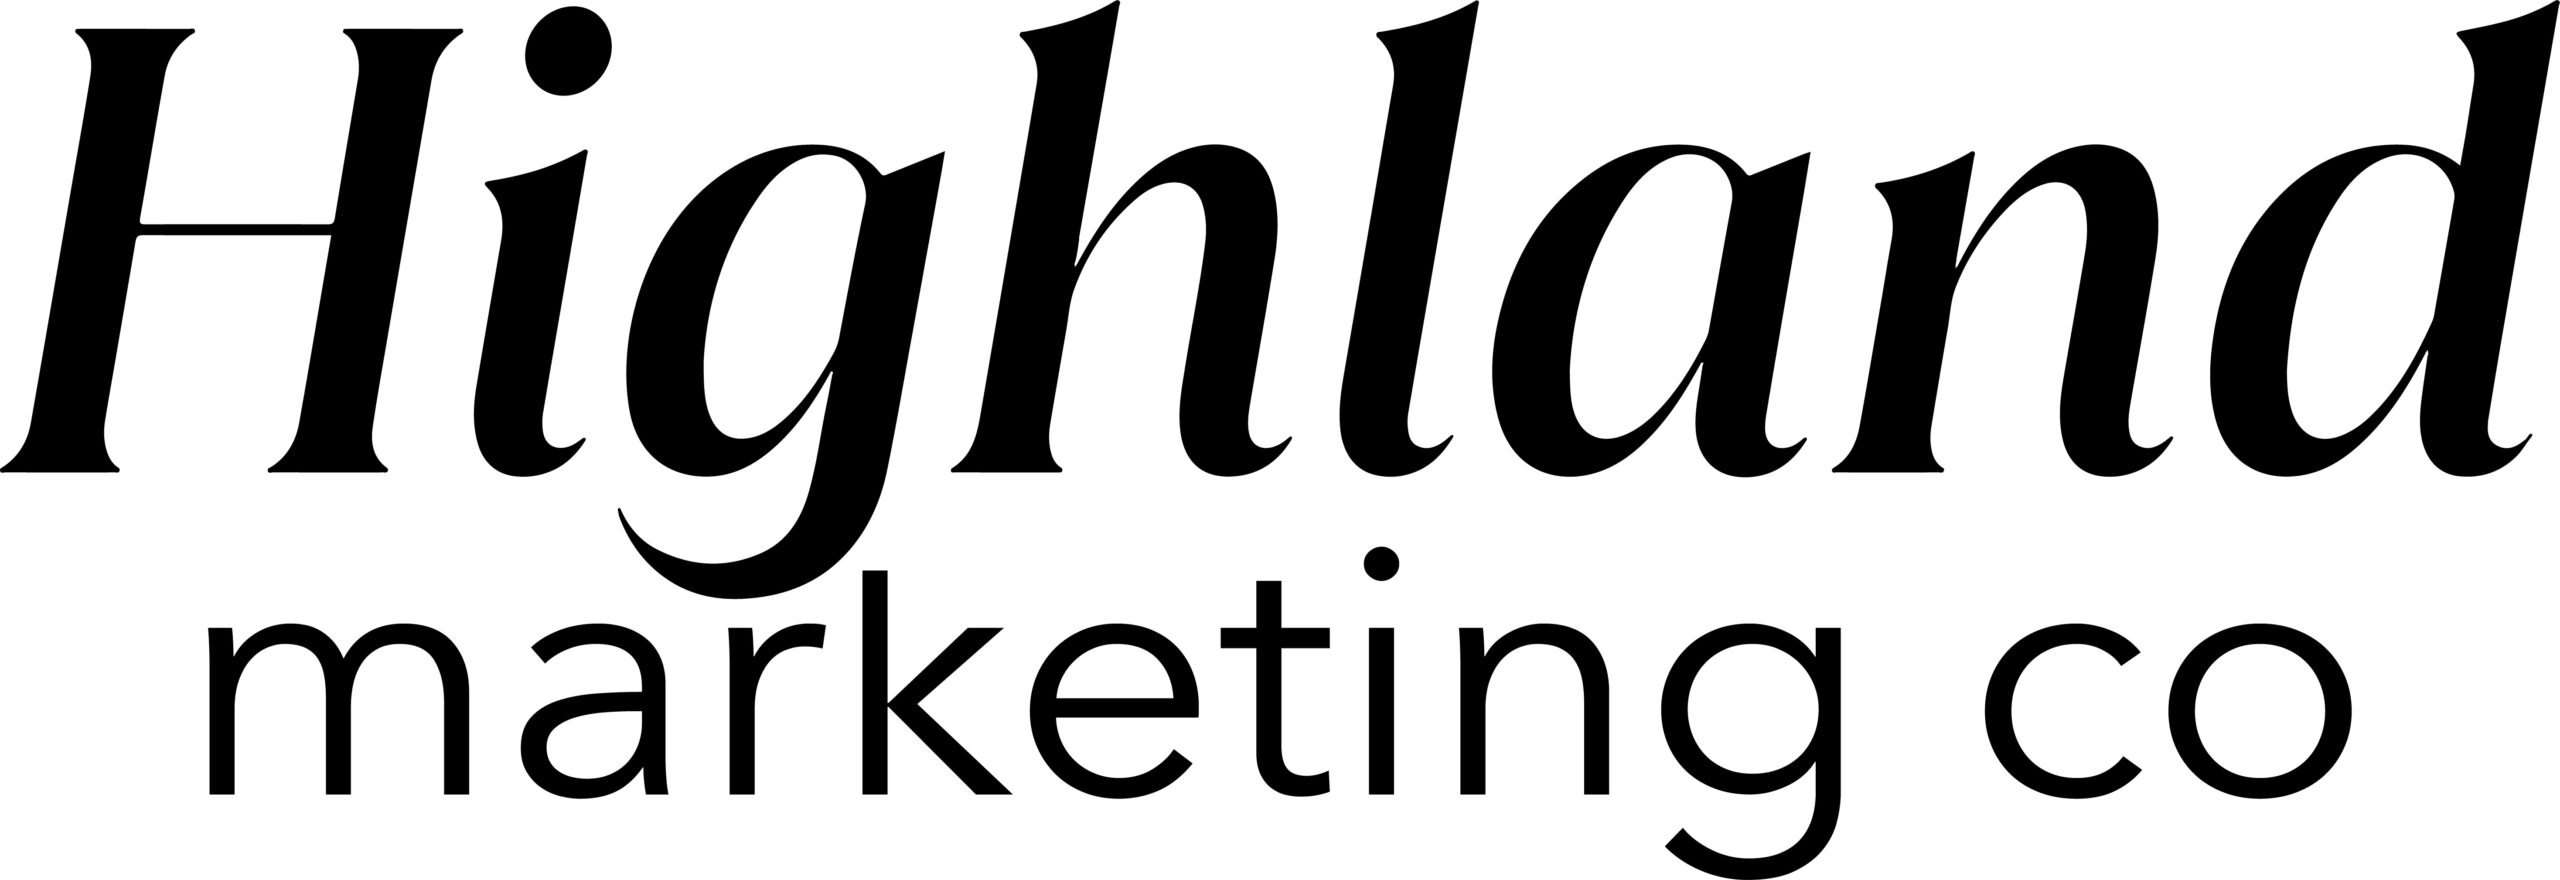 Highland Marketing Company